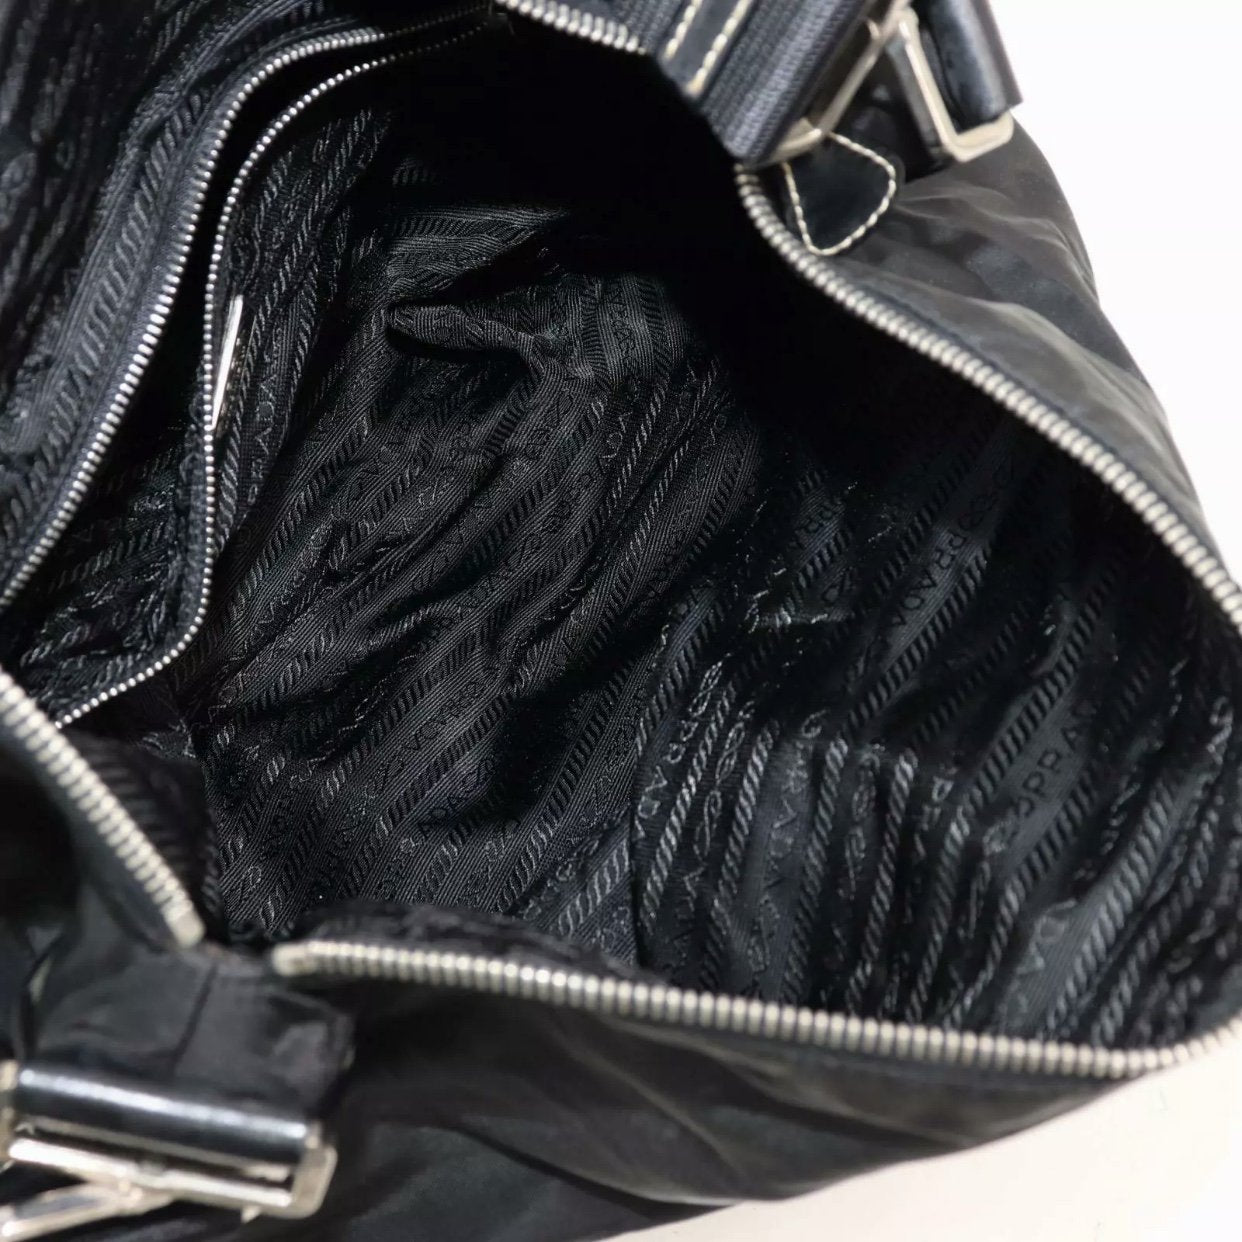 100% authenticity Guaranteed - Prada Nylon Leather Hand Bag